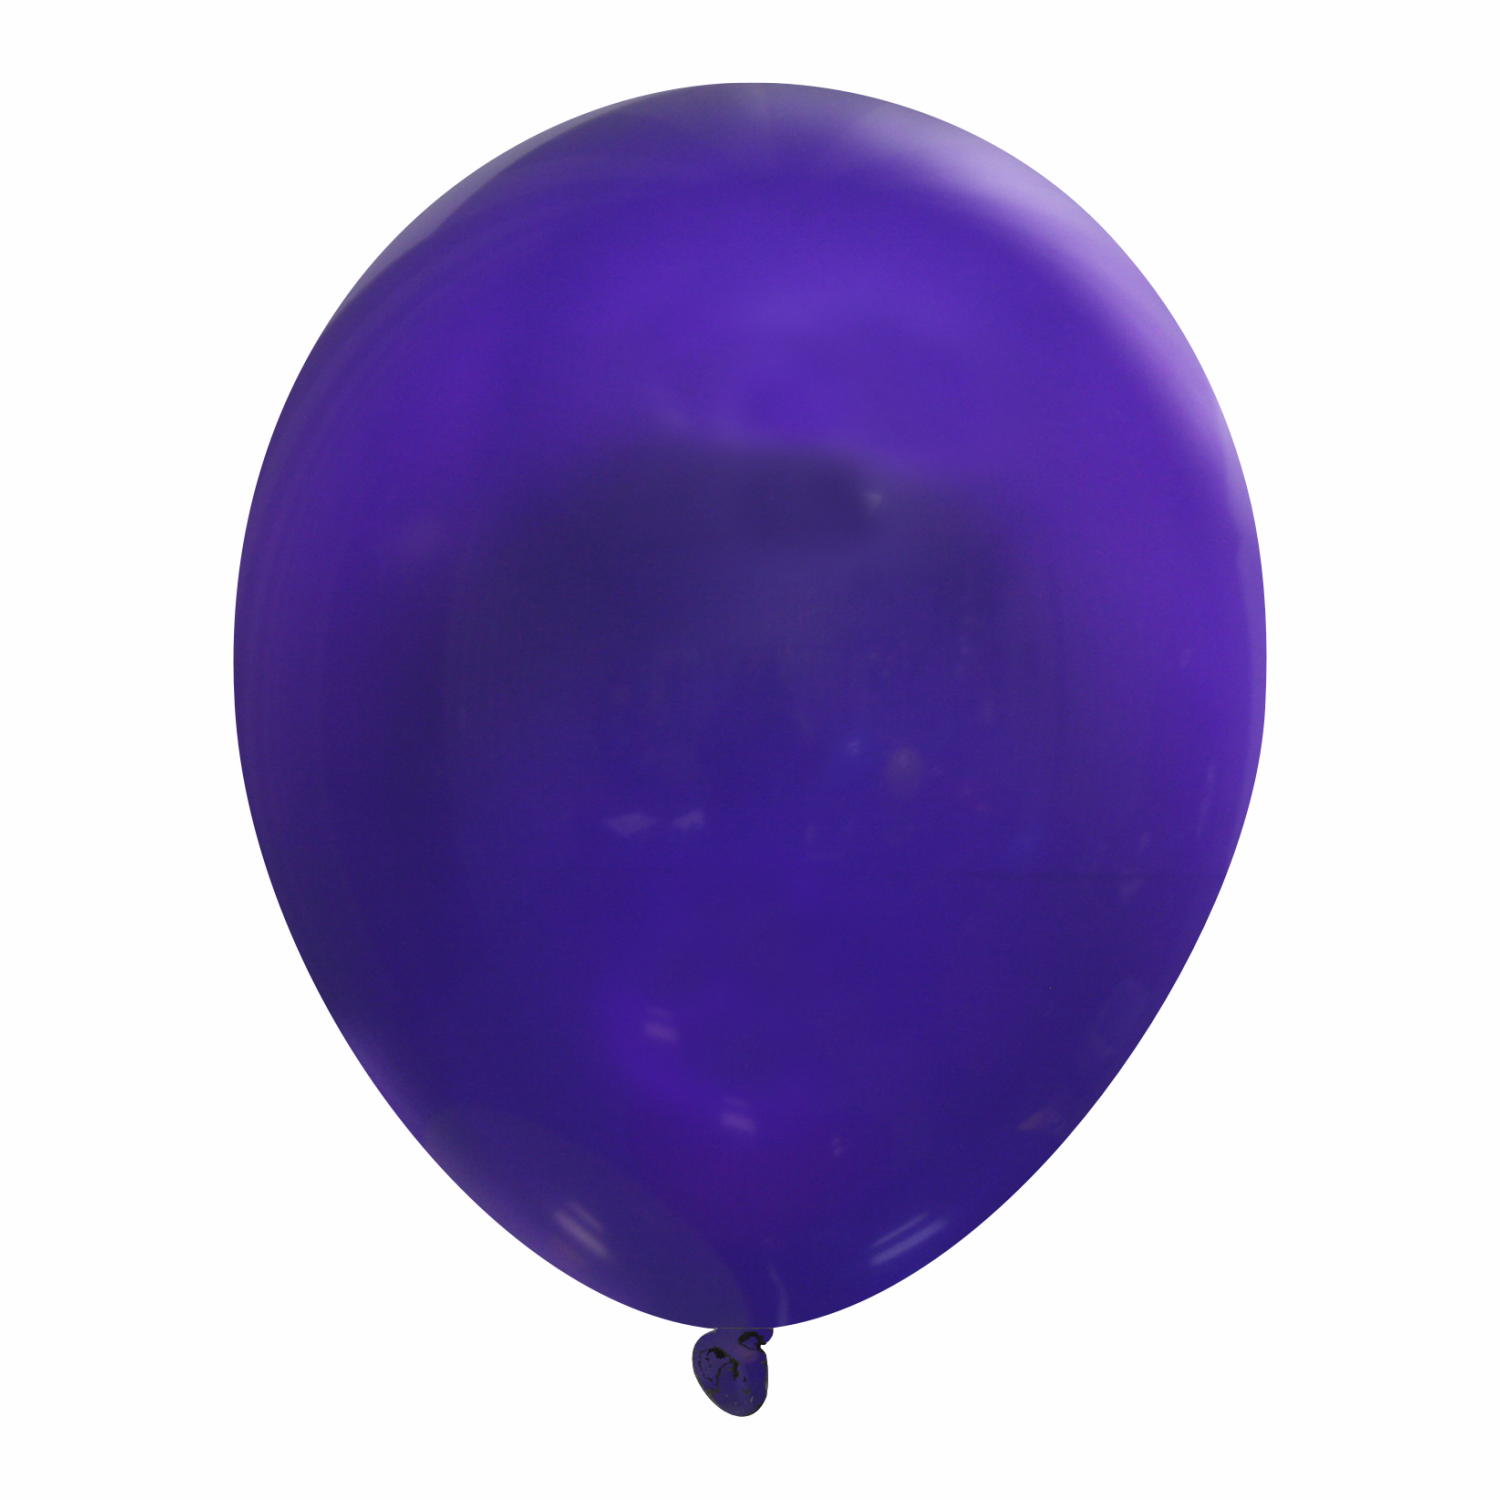 http://images.officebrain.com/migration-api-hidden-new/web/images/626/11crye-deep-purple.png